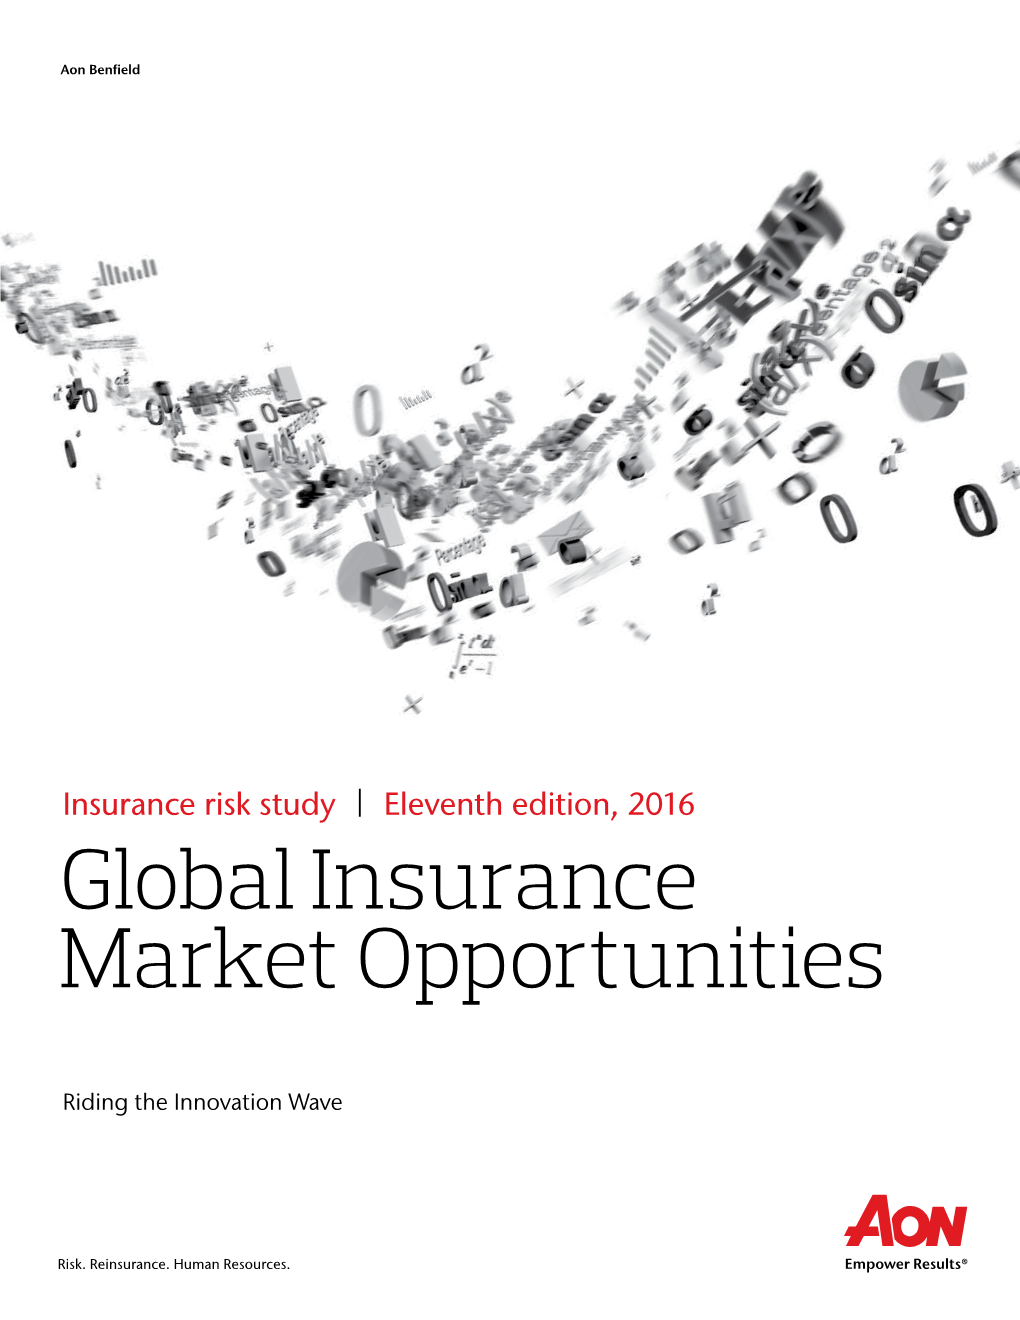 Global Insurance Market Opportunities